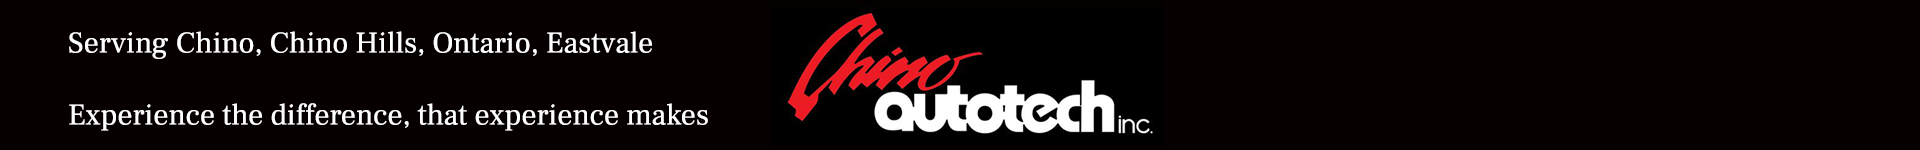 ChinoAutotech Inc. | Premiere Automotive Service / Diagnostics